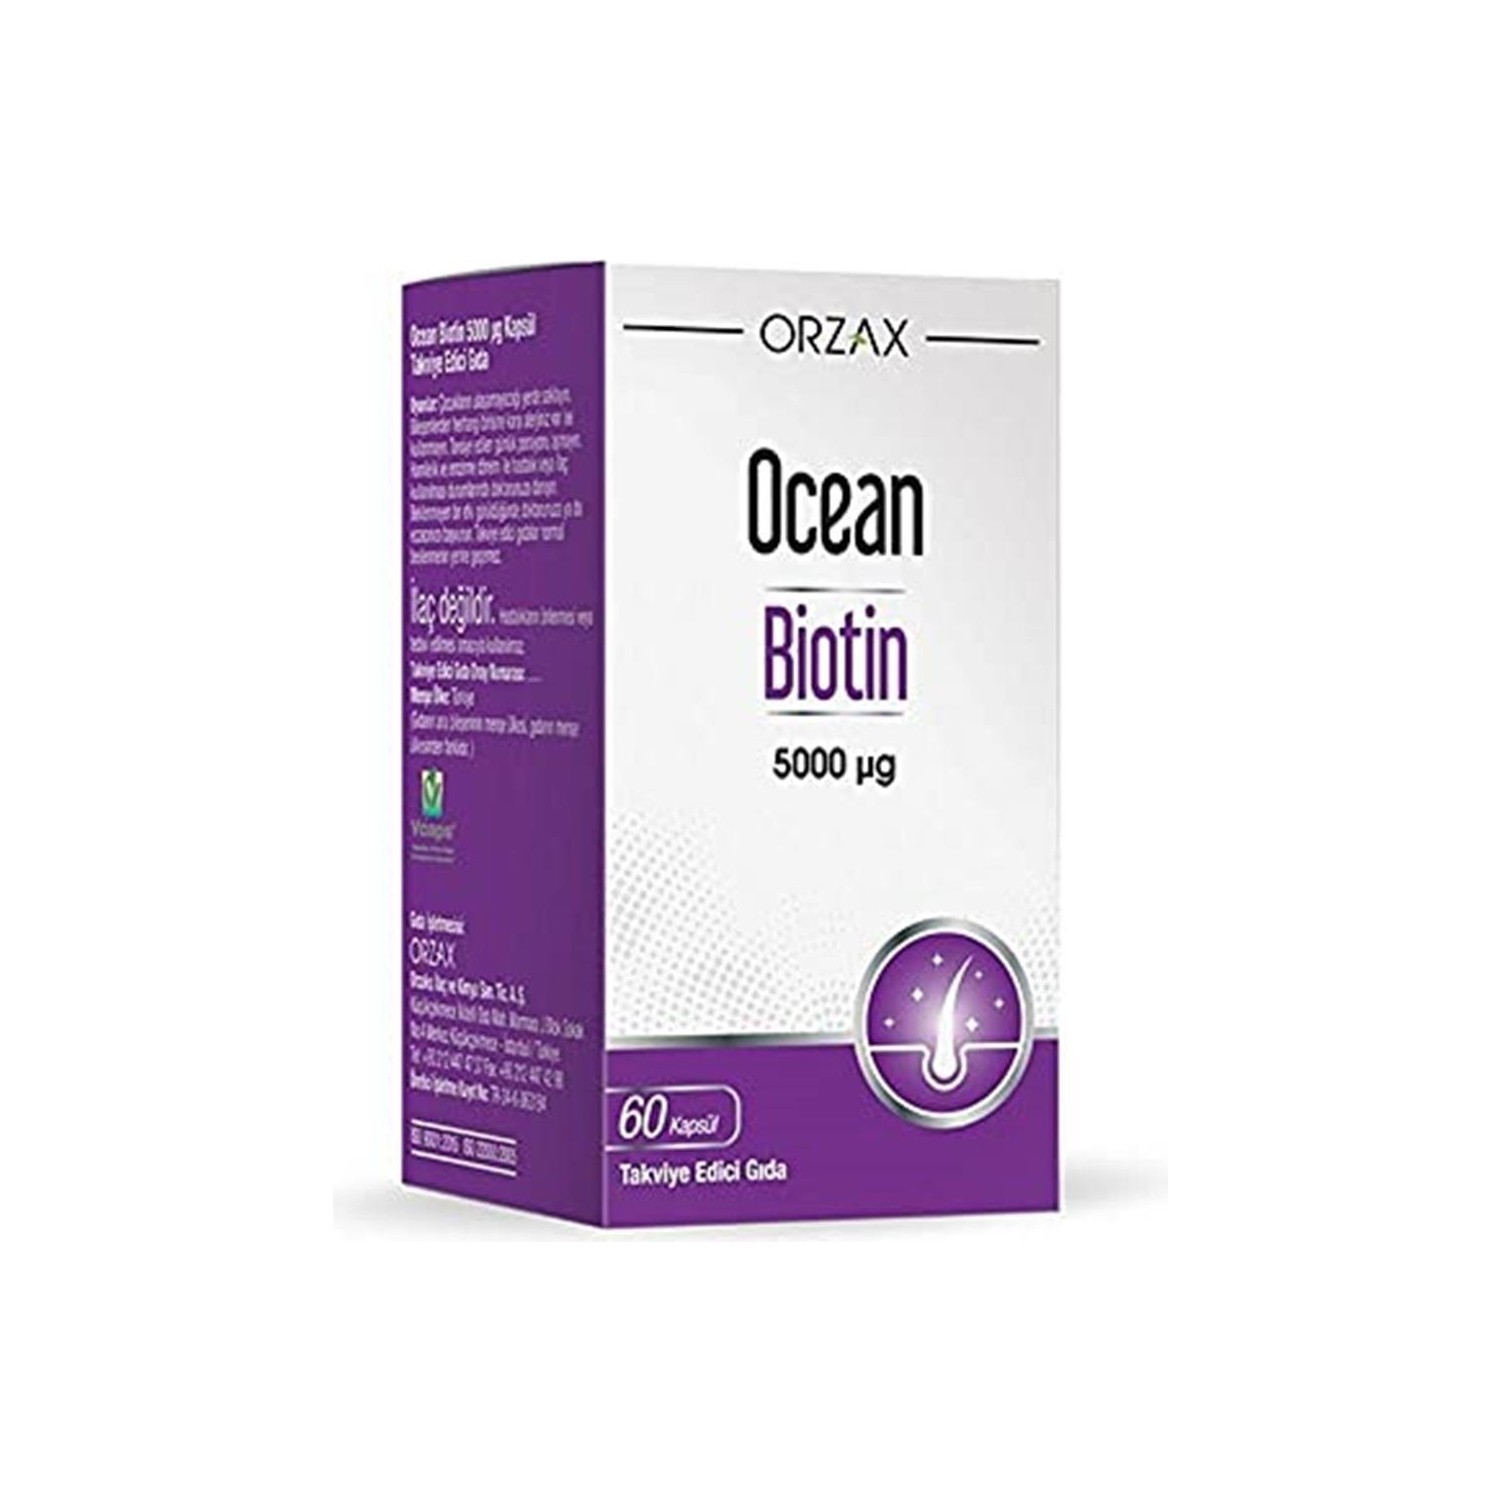 Пищевая добавка Ocean Biotin, 60 капсул 5000 мкг. пищевая добавка ocean biotin 60 капсул 5000 мкг